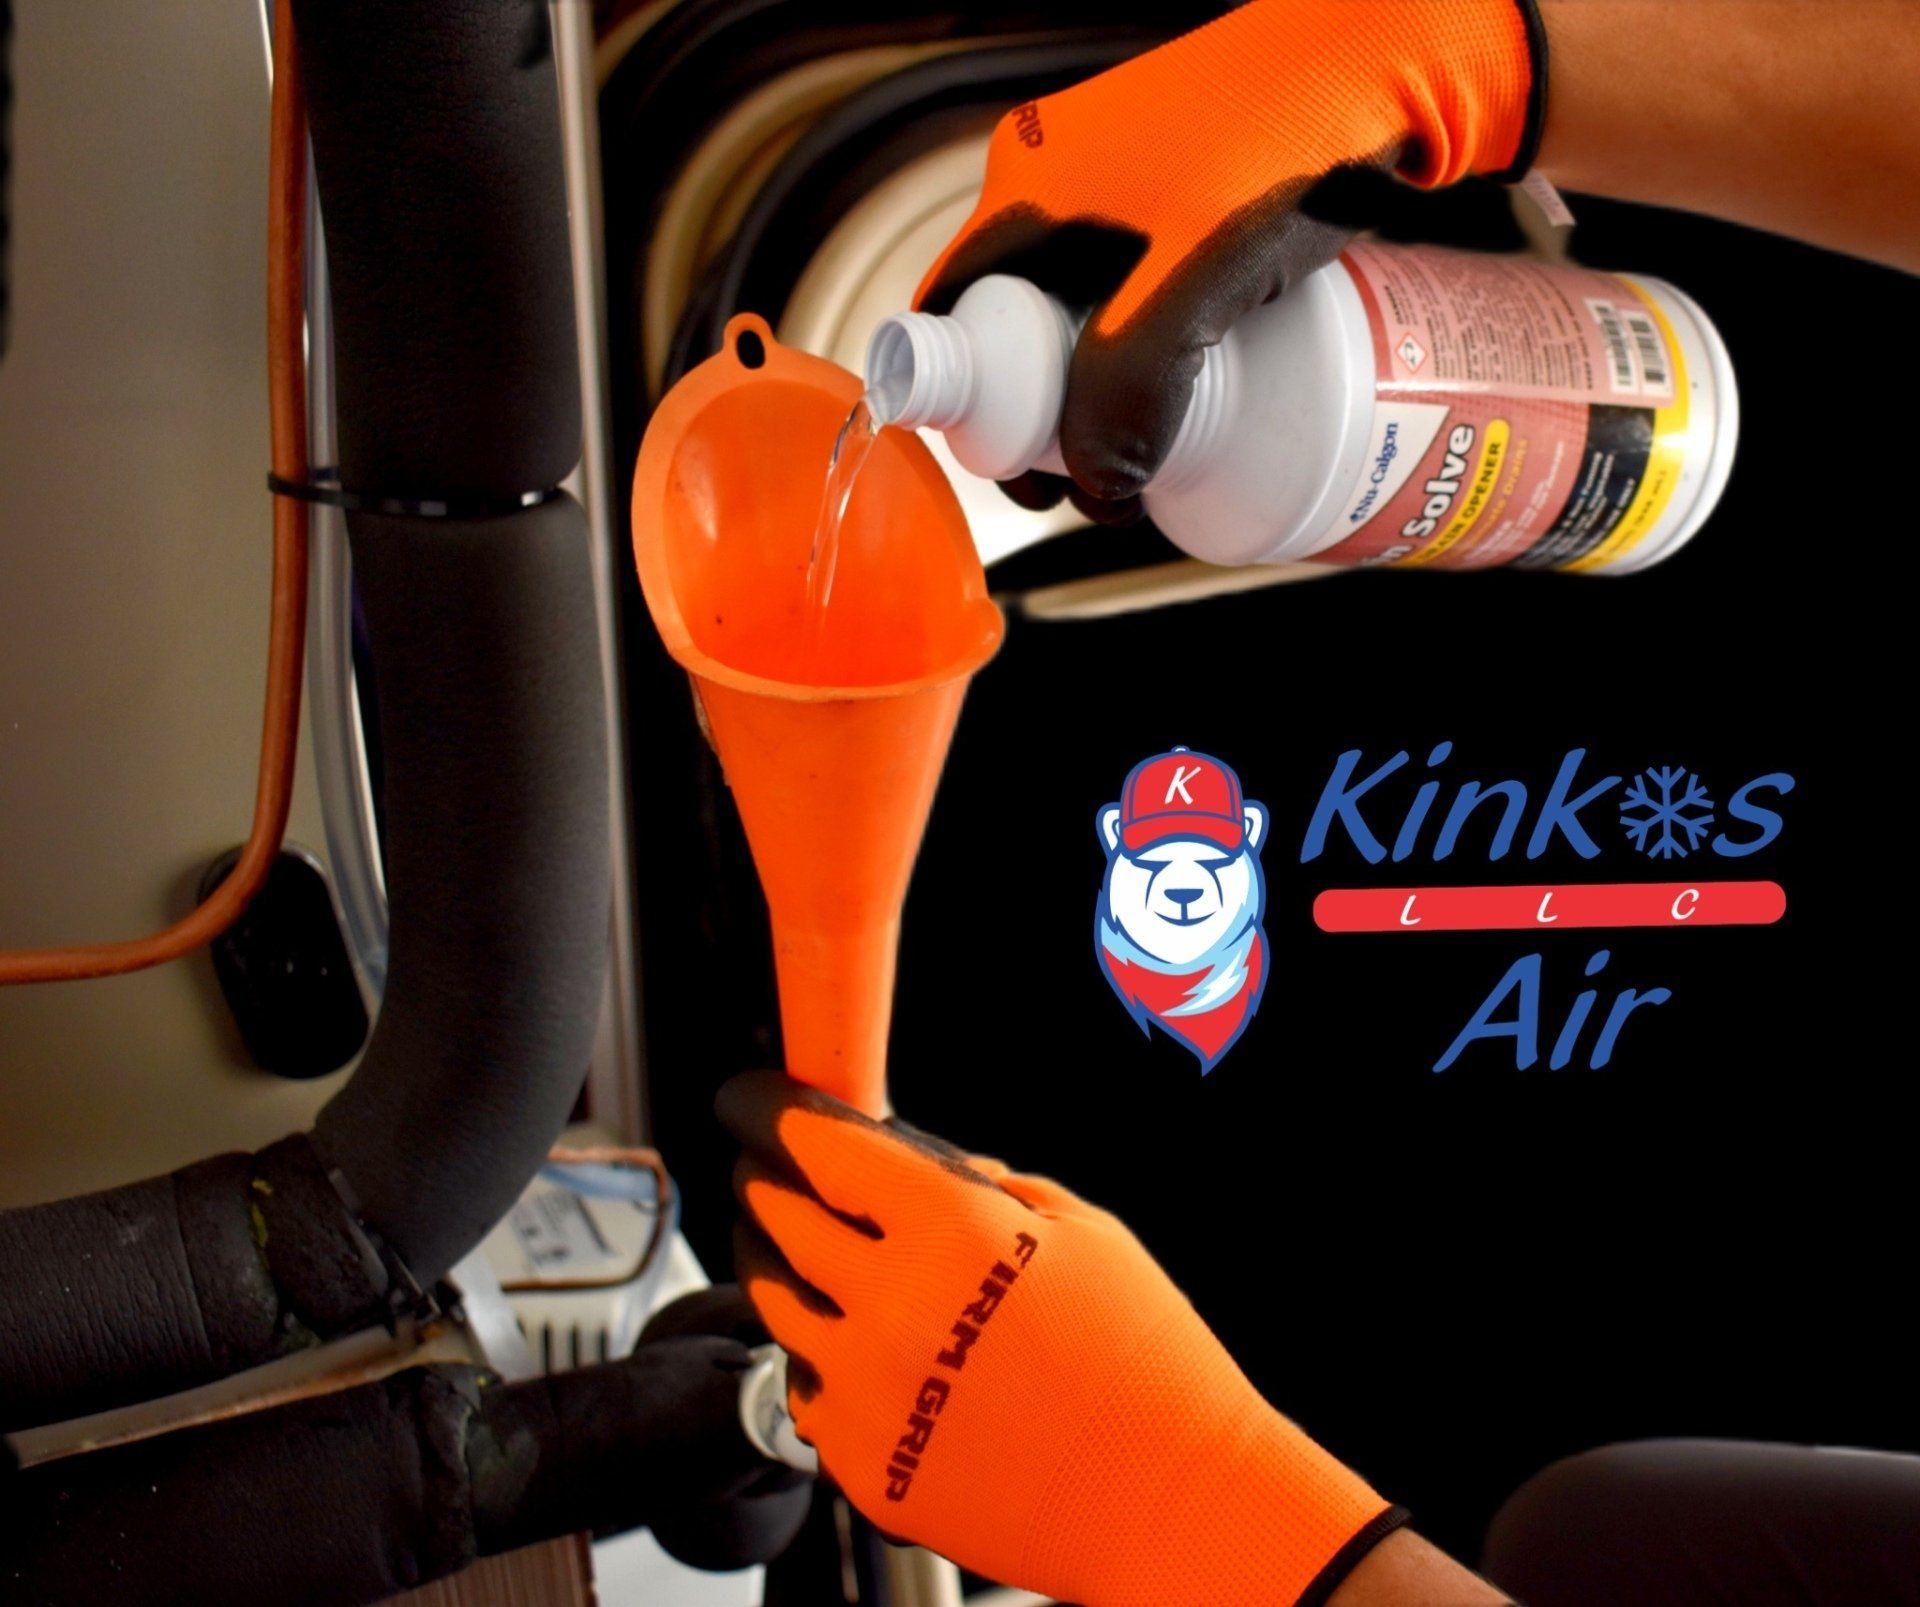 Air Conditioner Closeup Hand - Orlando, FL - Kinkos Air